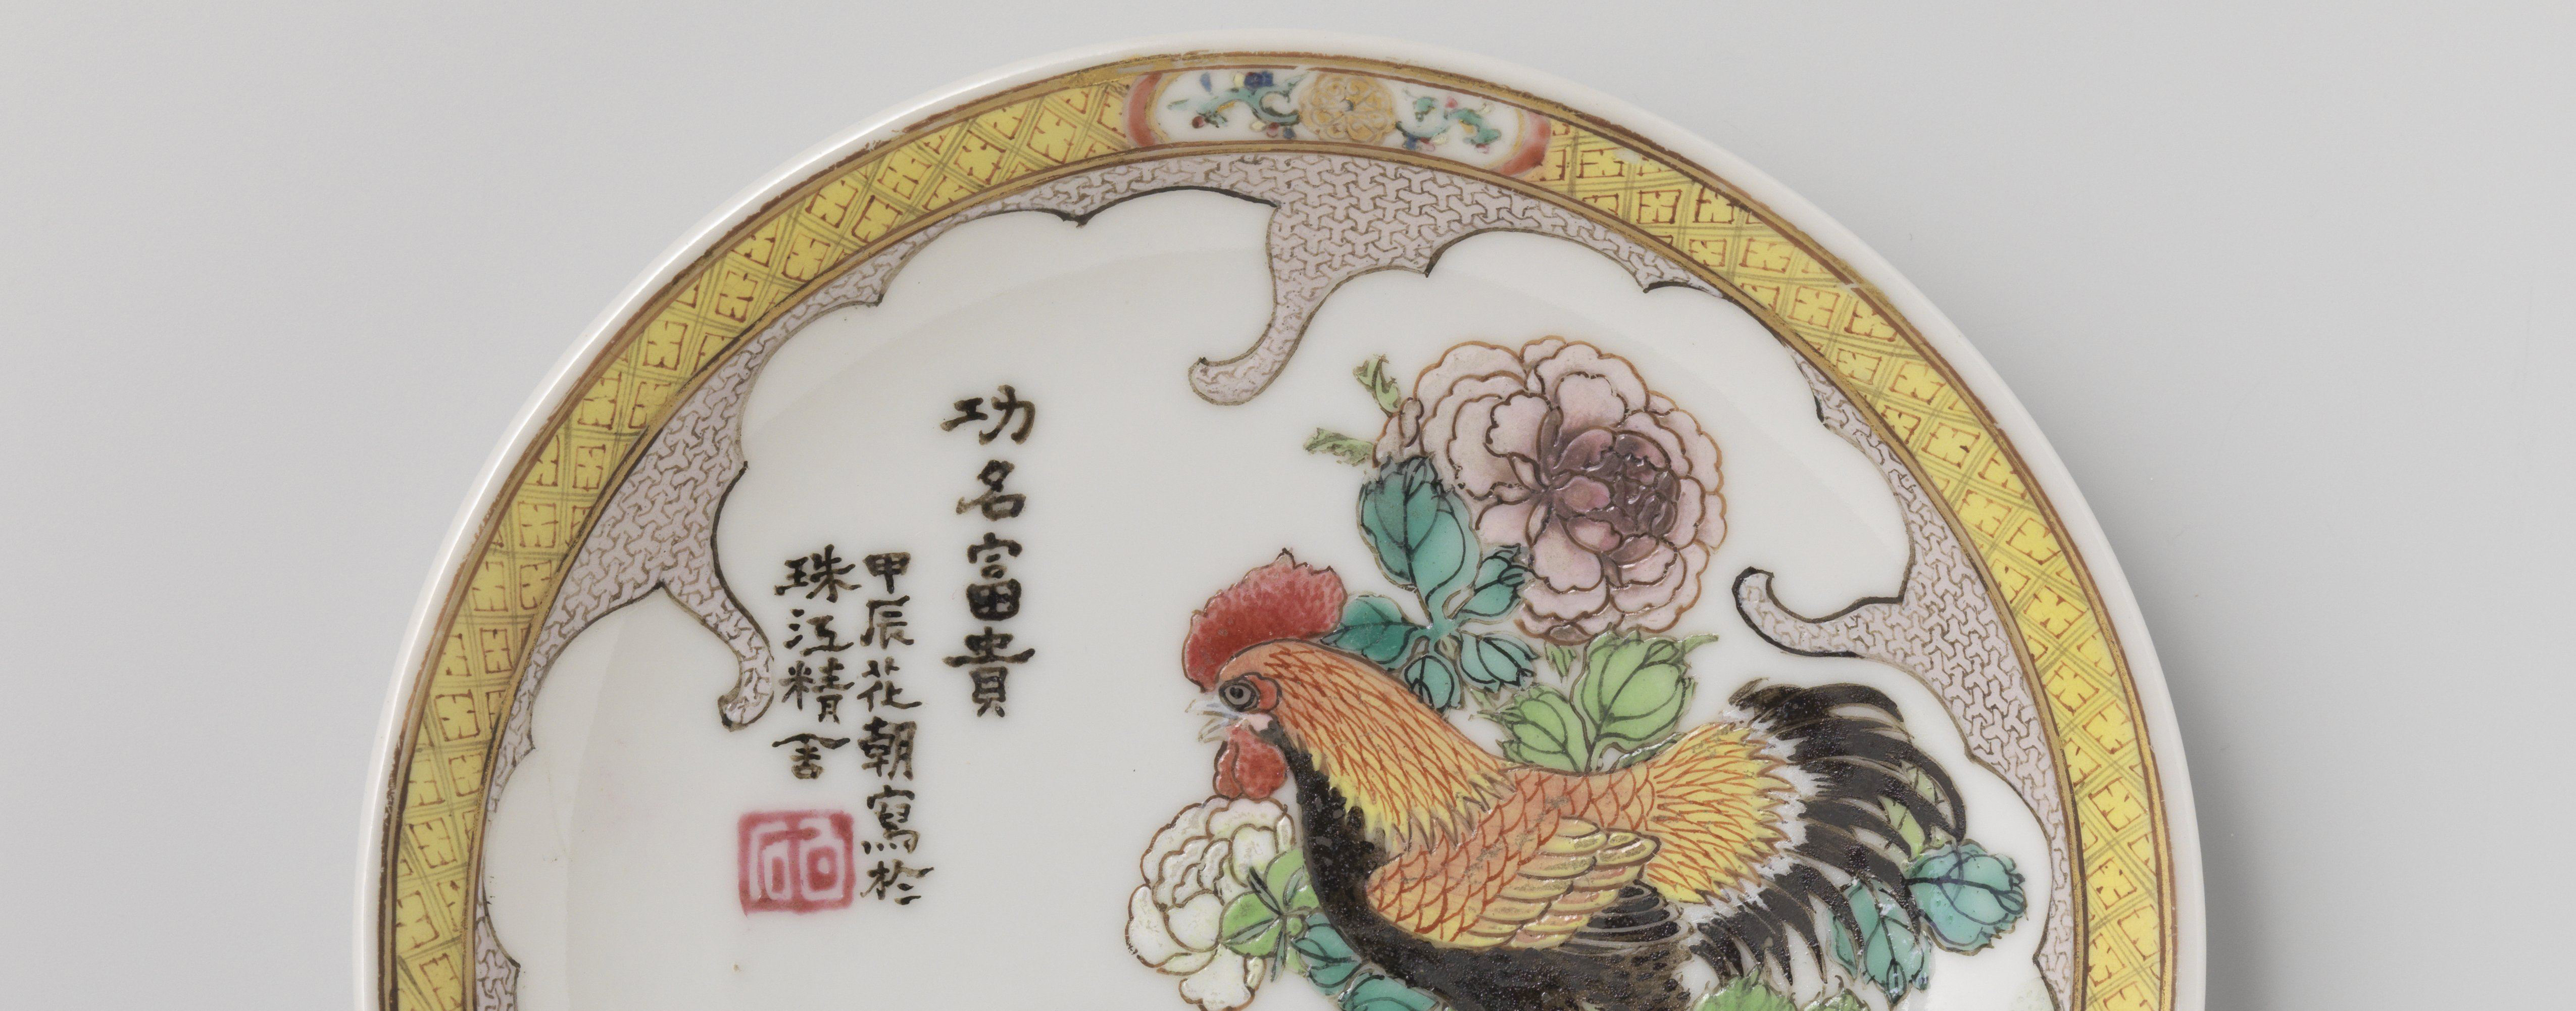 Canton ceramics: Treasures glittering on the Maritime Silk Road